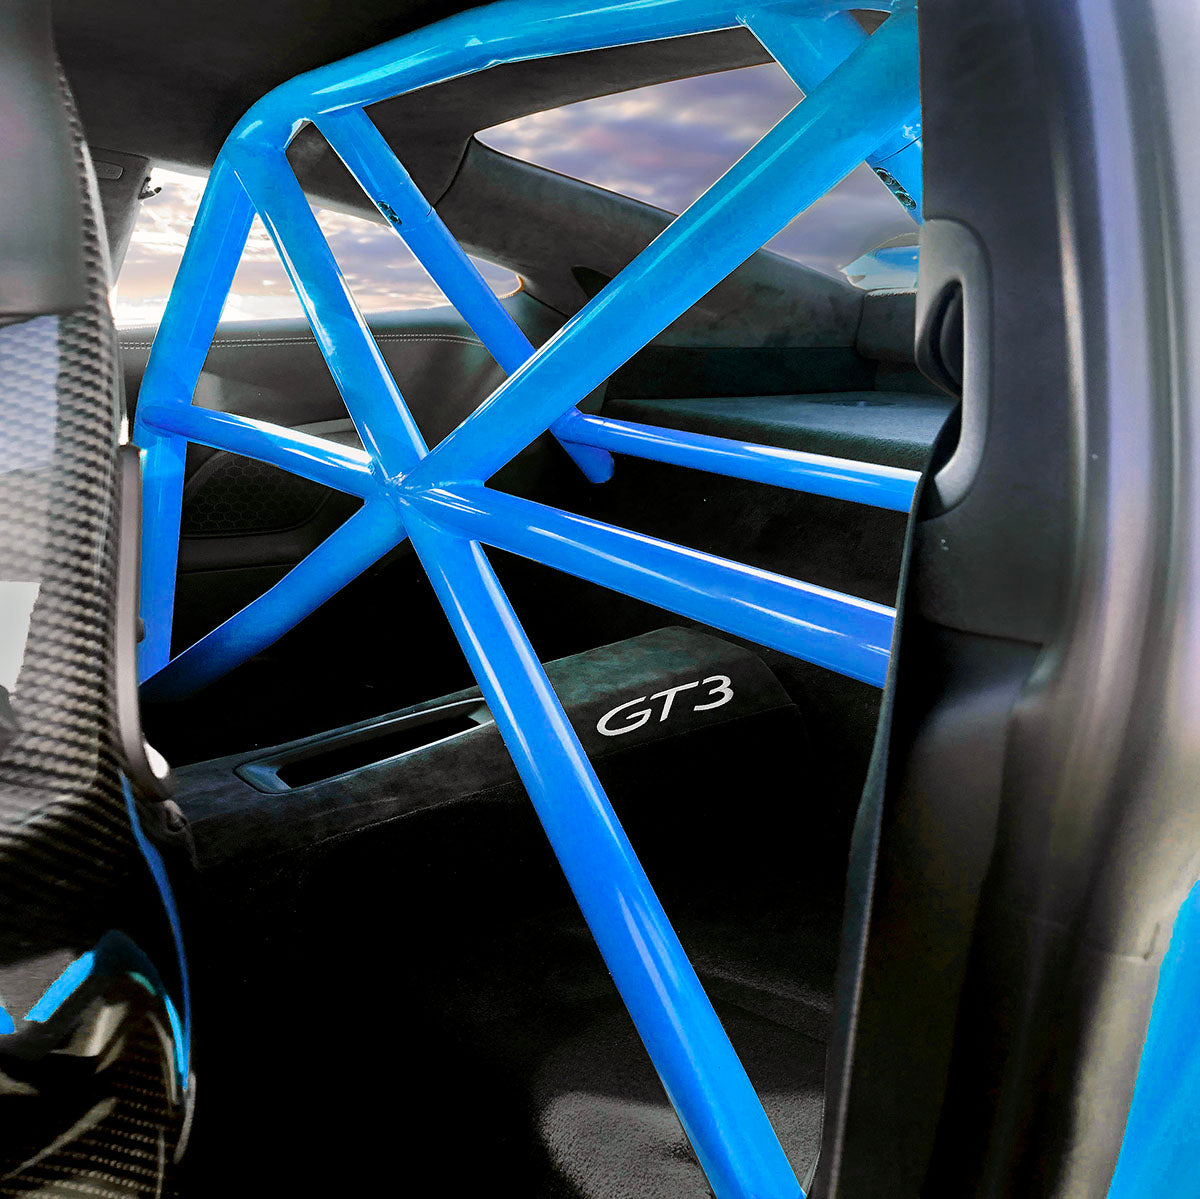 Shark Blue Porsche GT3 roll bar custom color lowest price free powder coat in stock